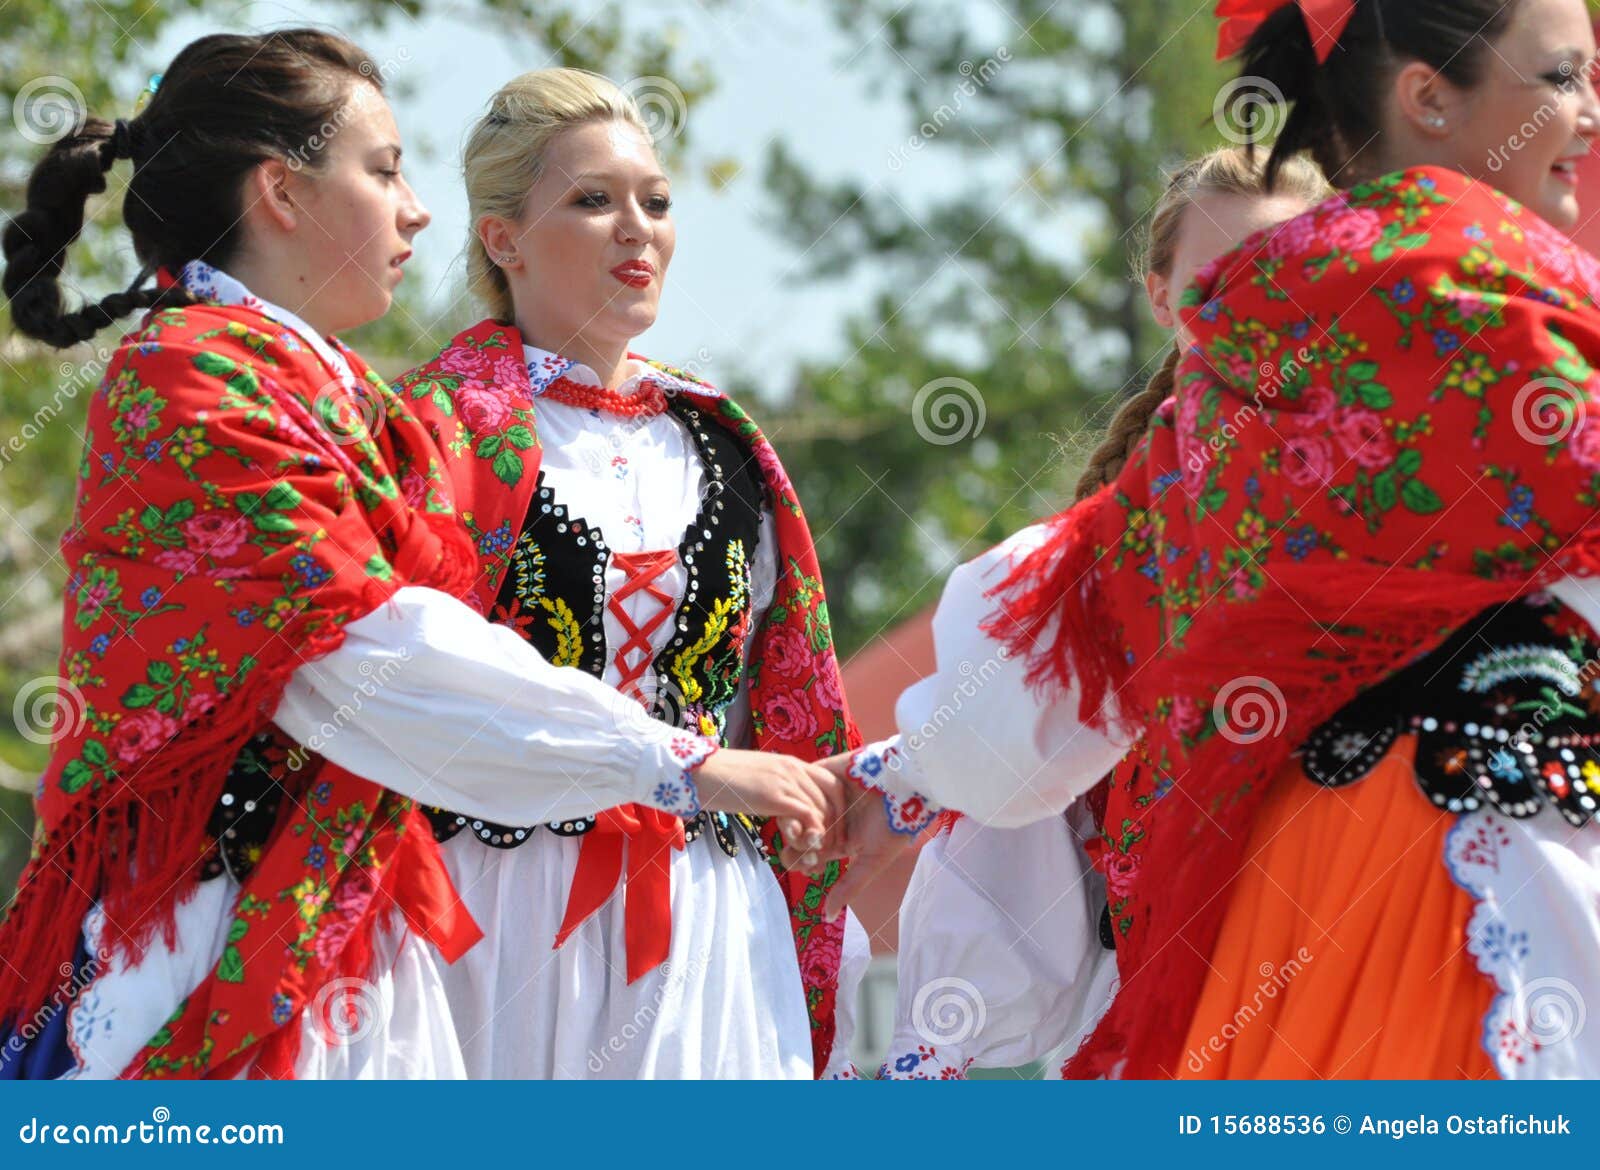 Hungarian Girls Dancing at Heritage Festival Editorial Photo - Image of ...